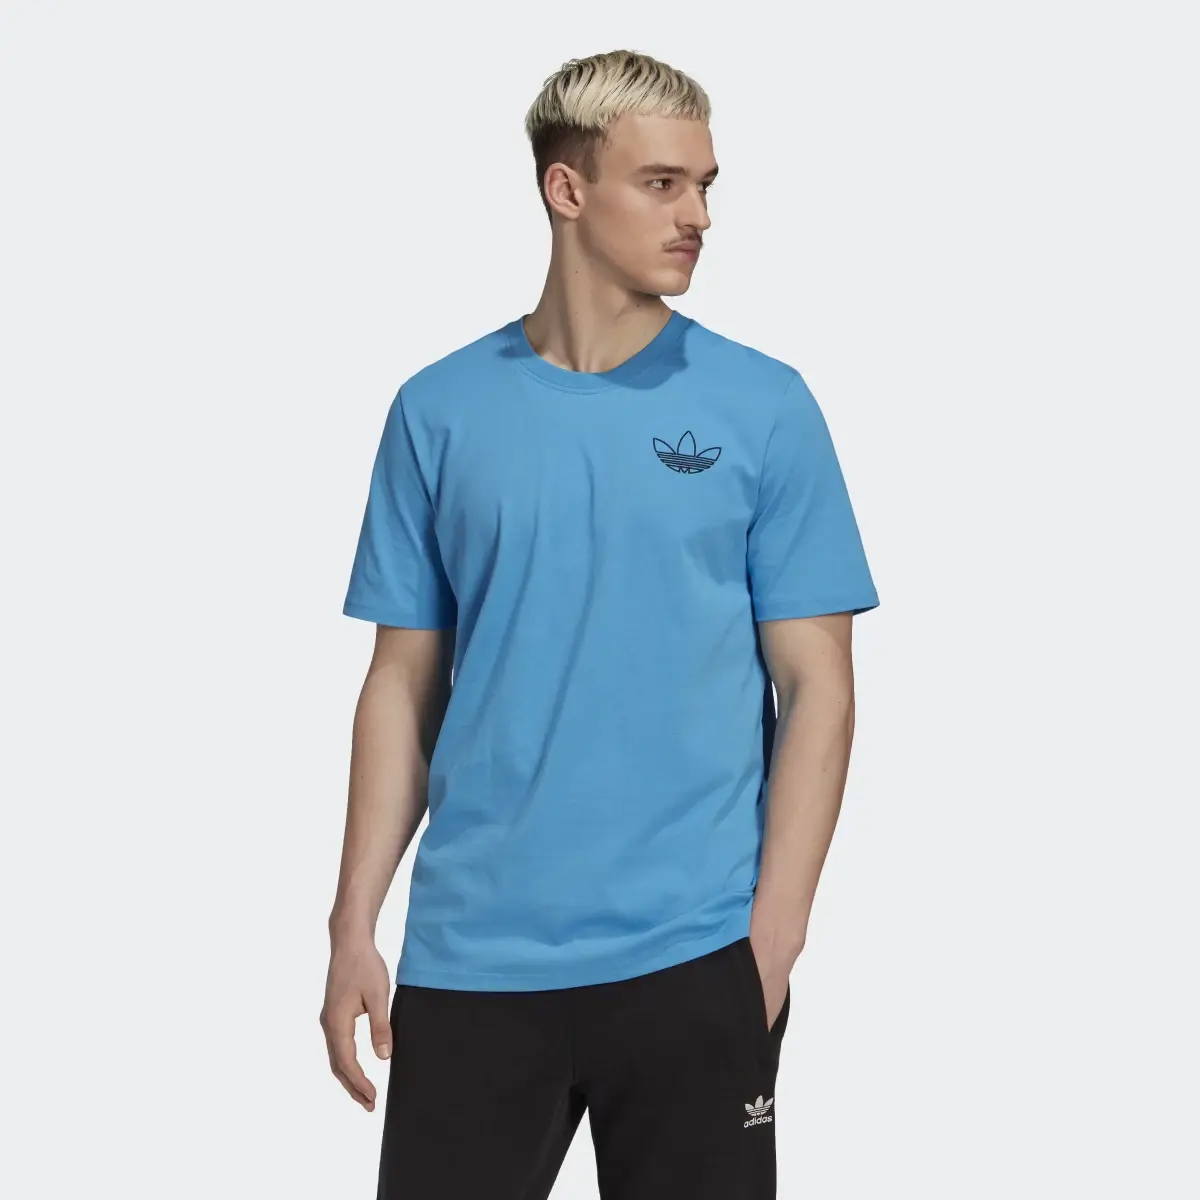 Adidas T-shirt Style Trefoil Series. 2